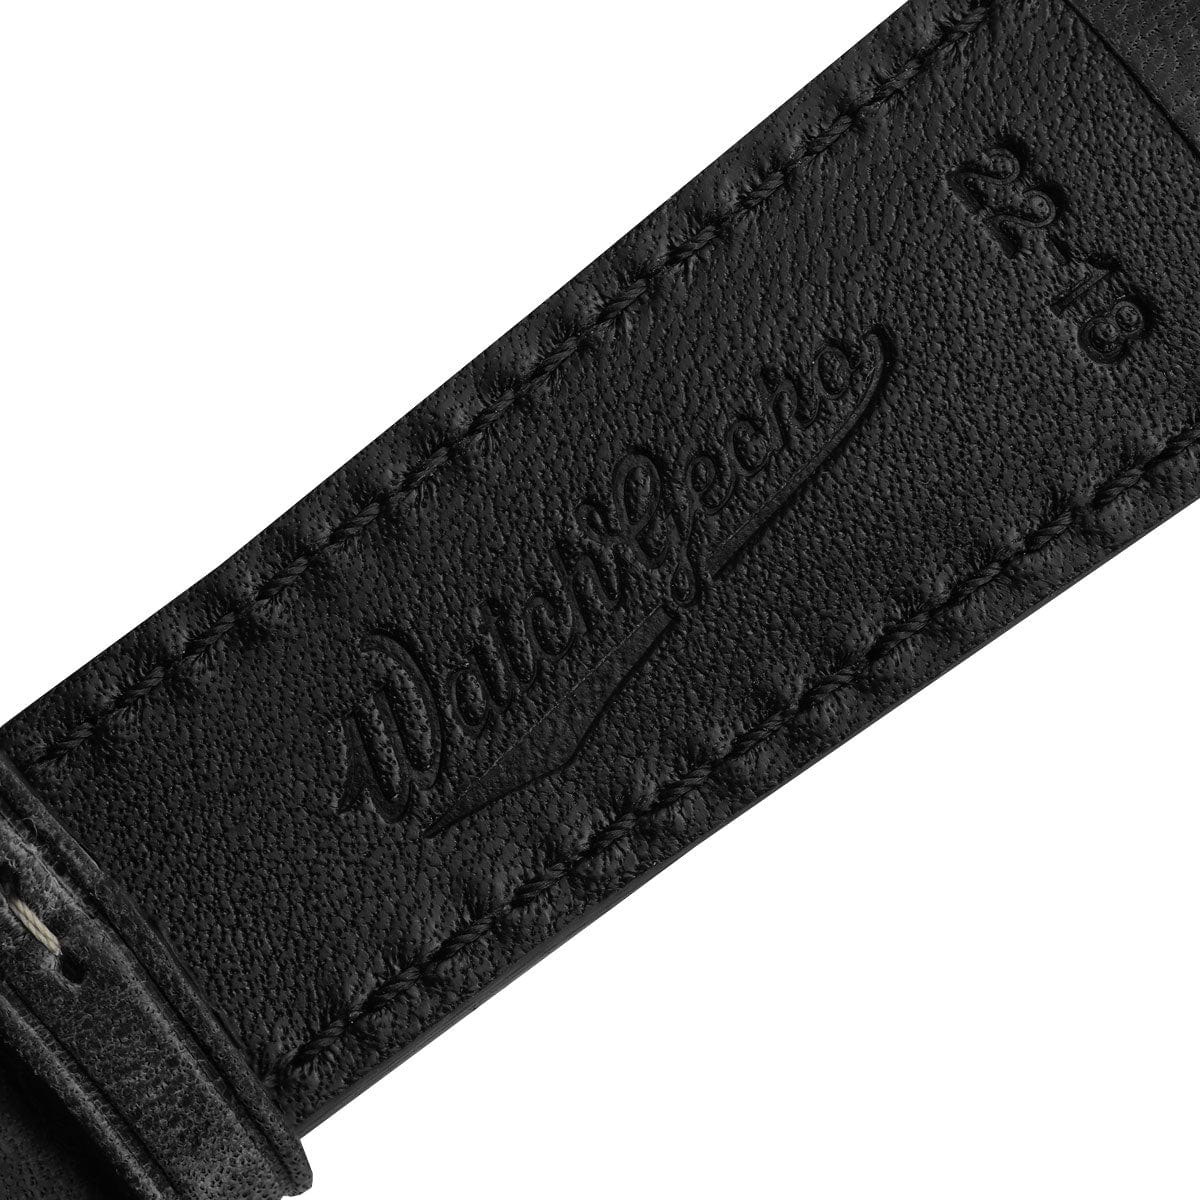 Original Vintage Highley Genuine Leather Watch Strap - Black